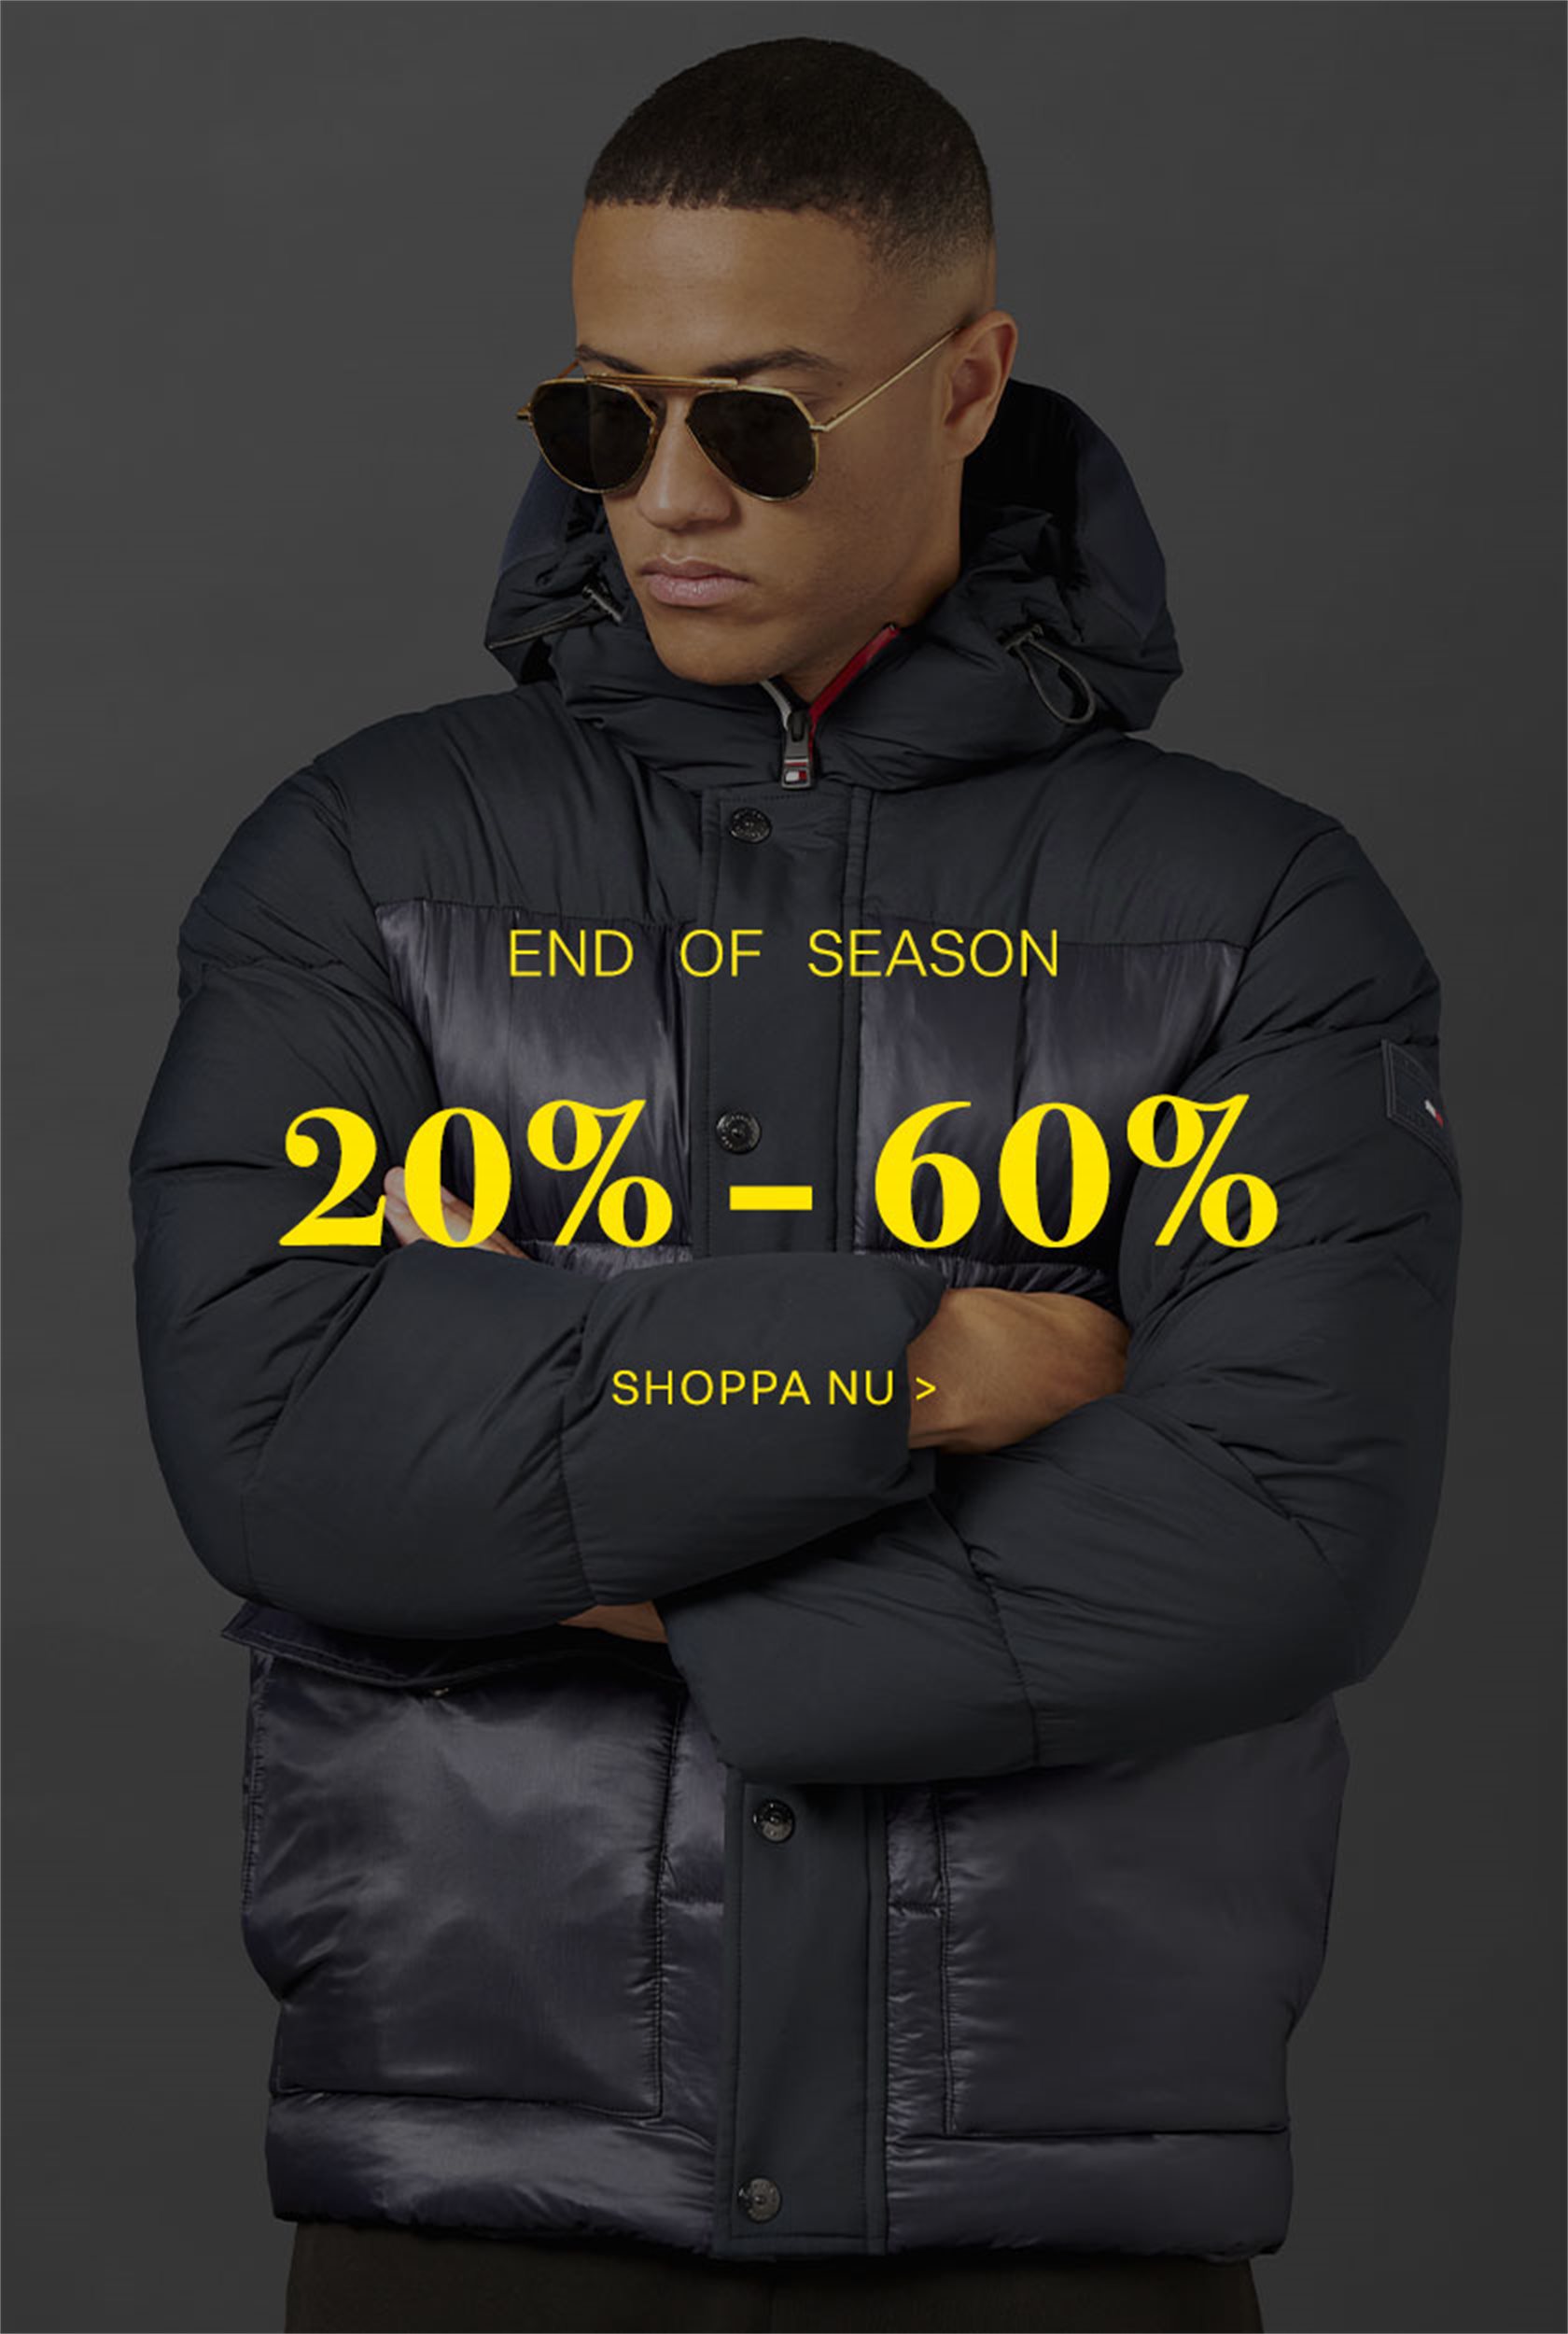 End of Season - Spara 20-60%